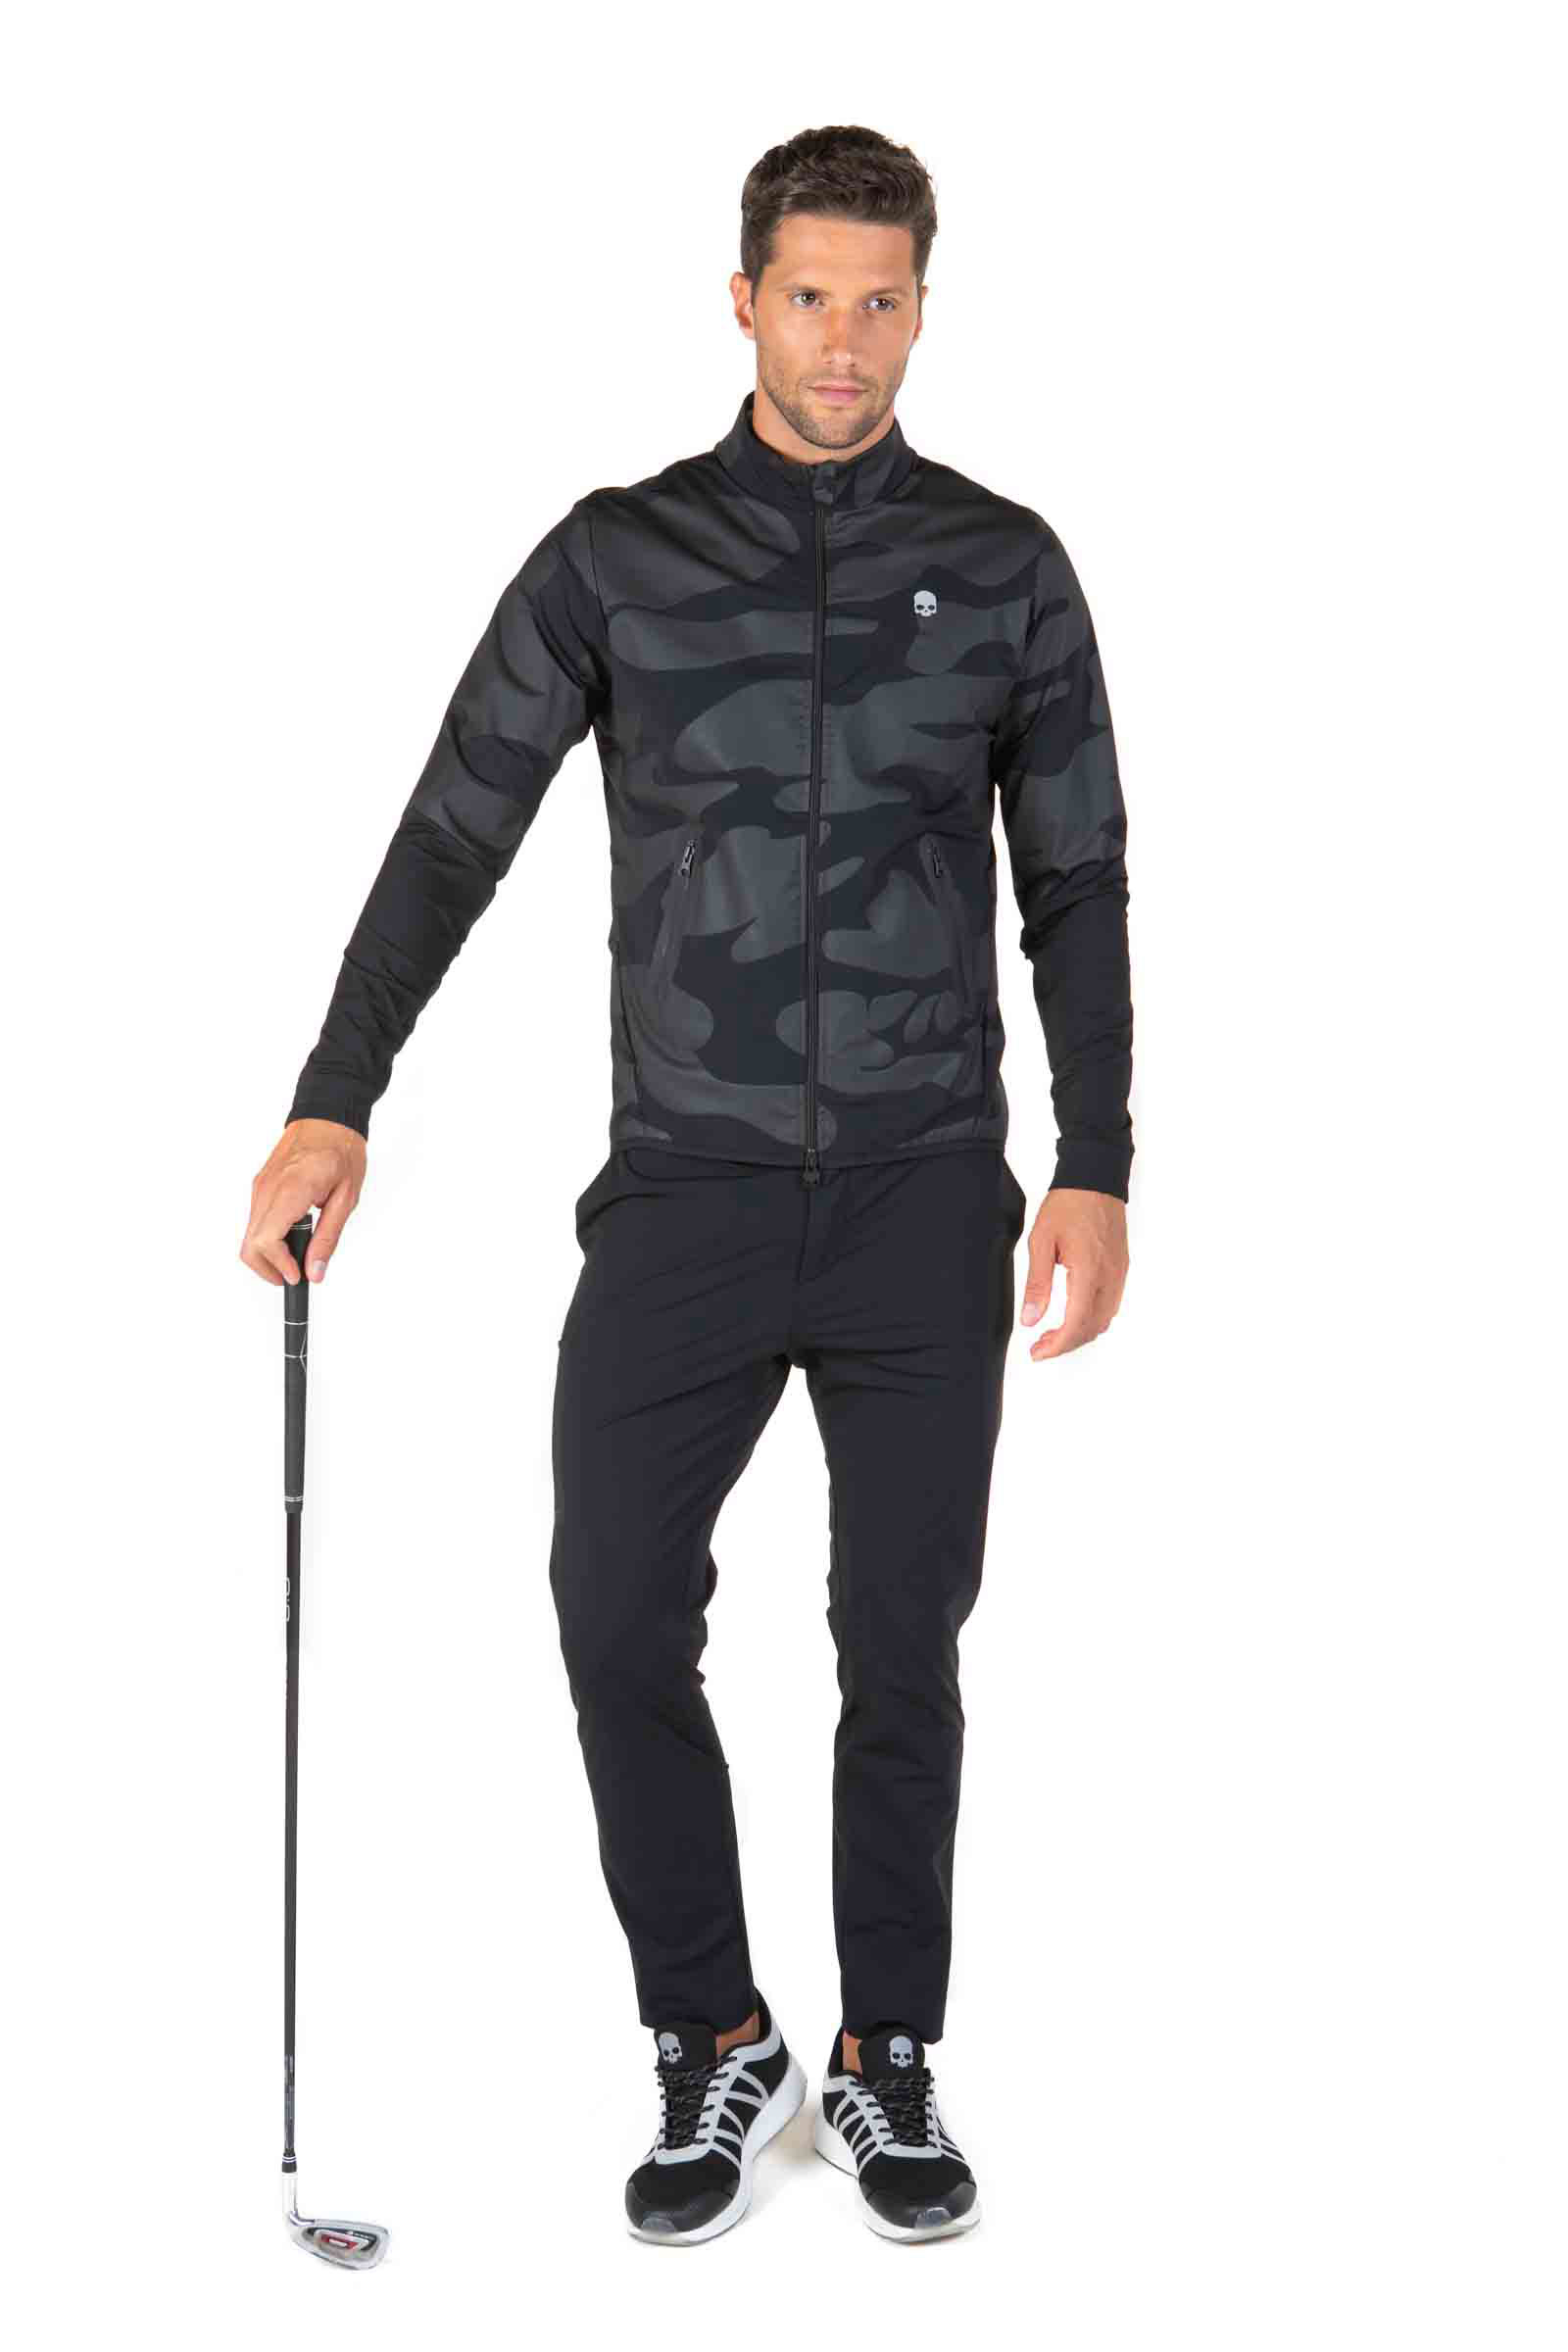 GOLF JKT - BLACK CAMOUFLAGE - Abbigliamento sportivo | Hydrogen